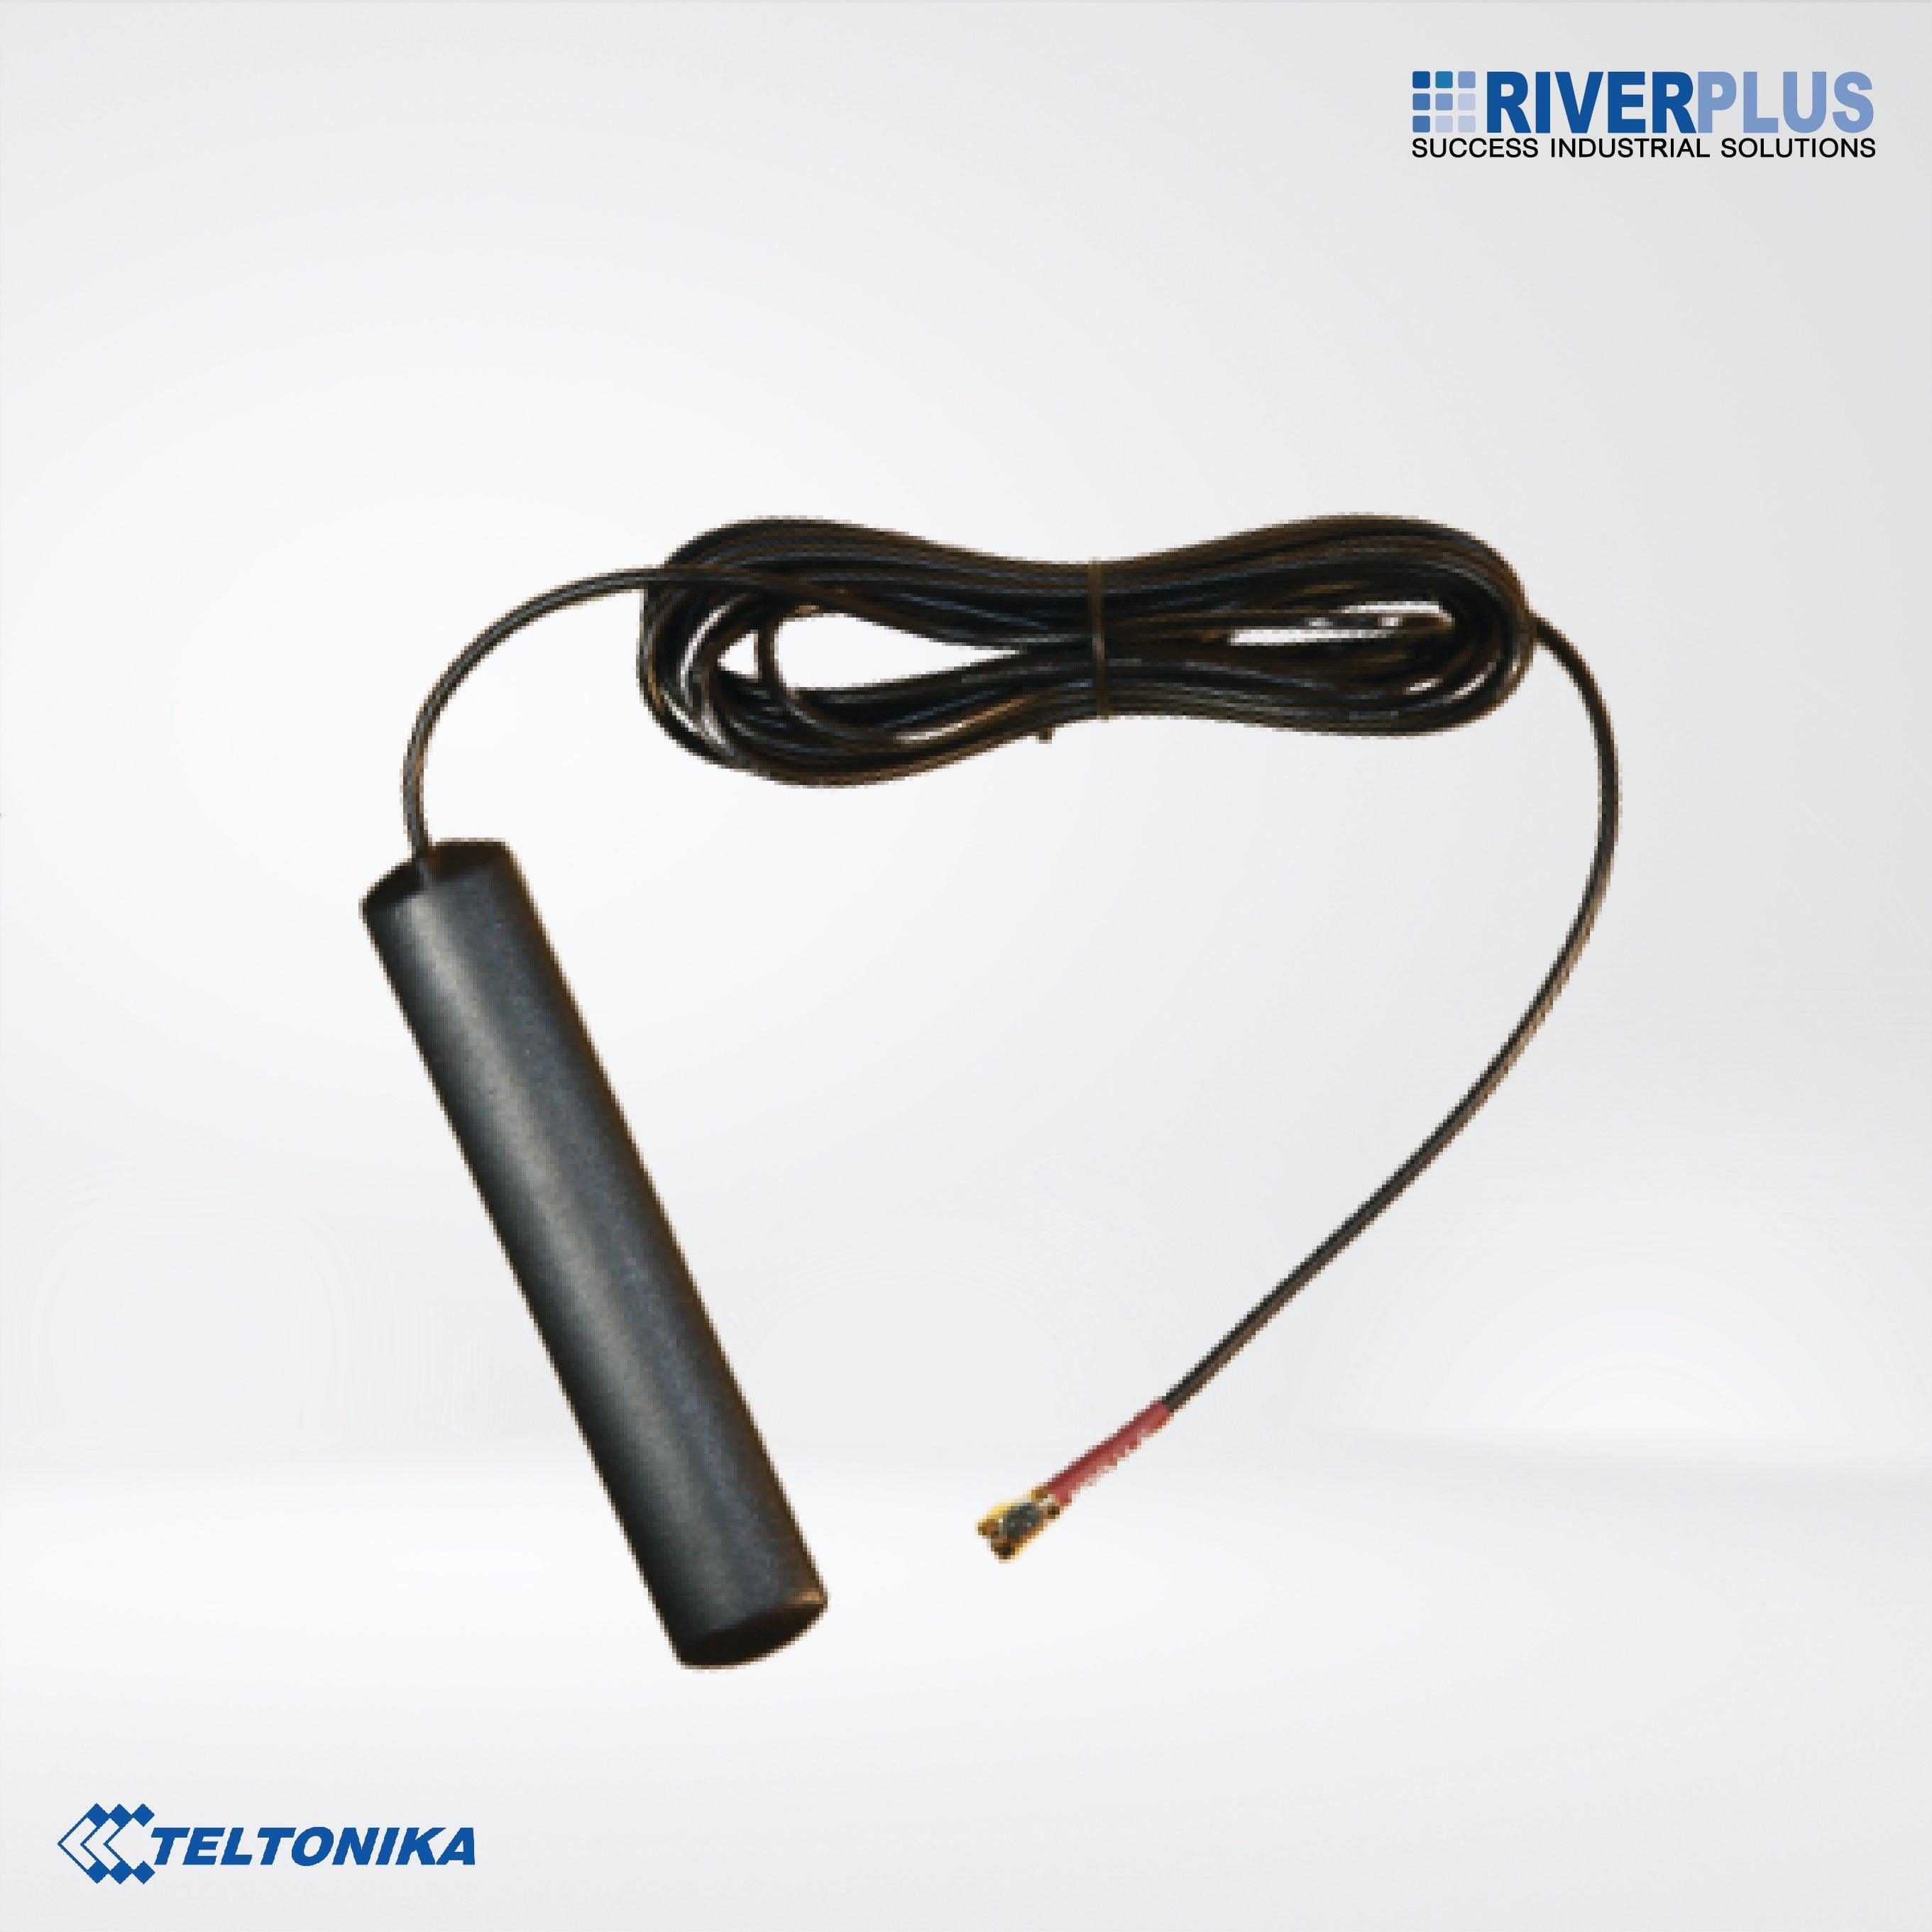 PR1AS420 Mobile Adhesive SMA Antenna - Riverplus